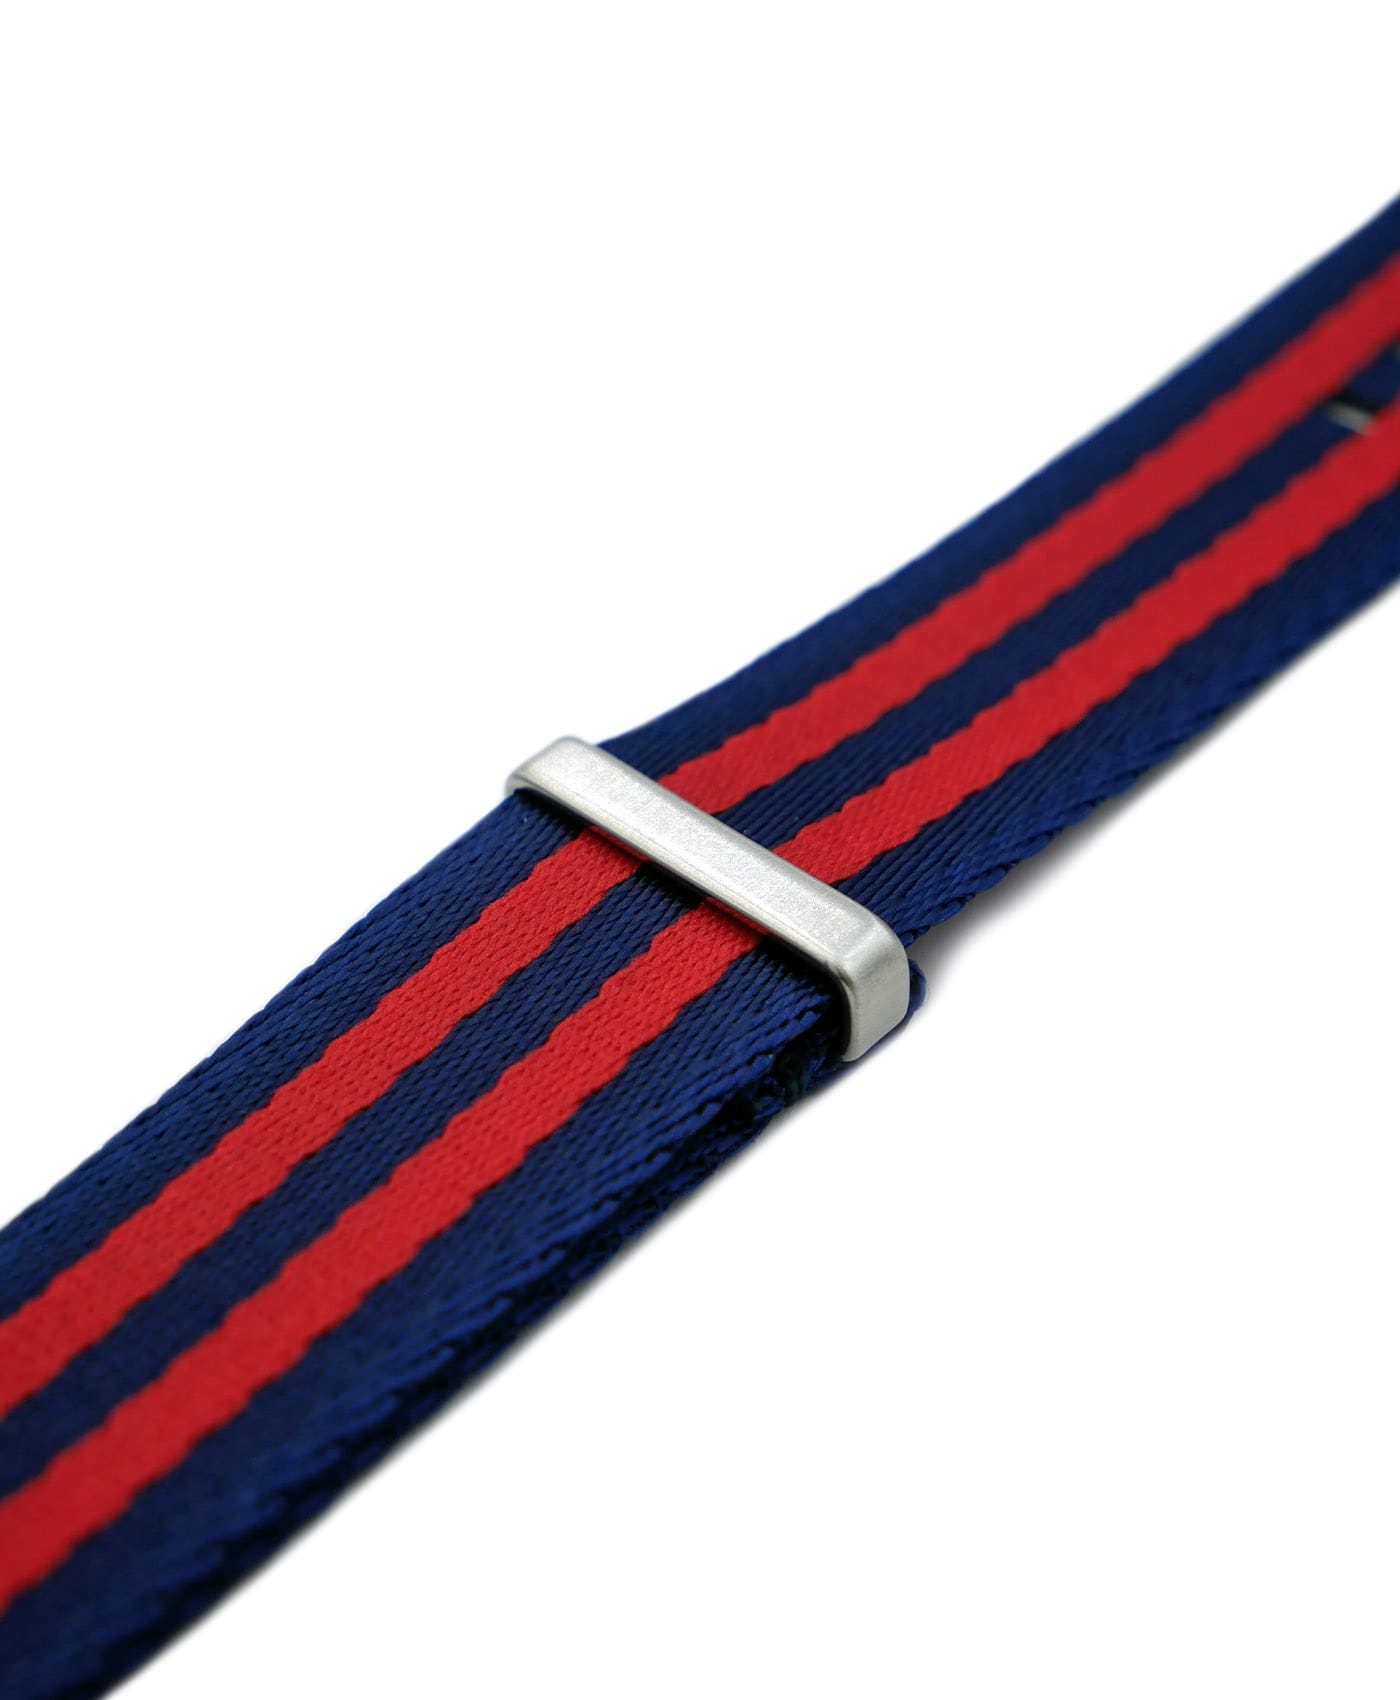 Premium_Nato-straps brushed_red blue striped_brushed hardware